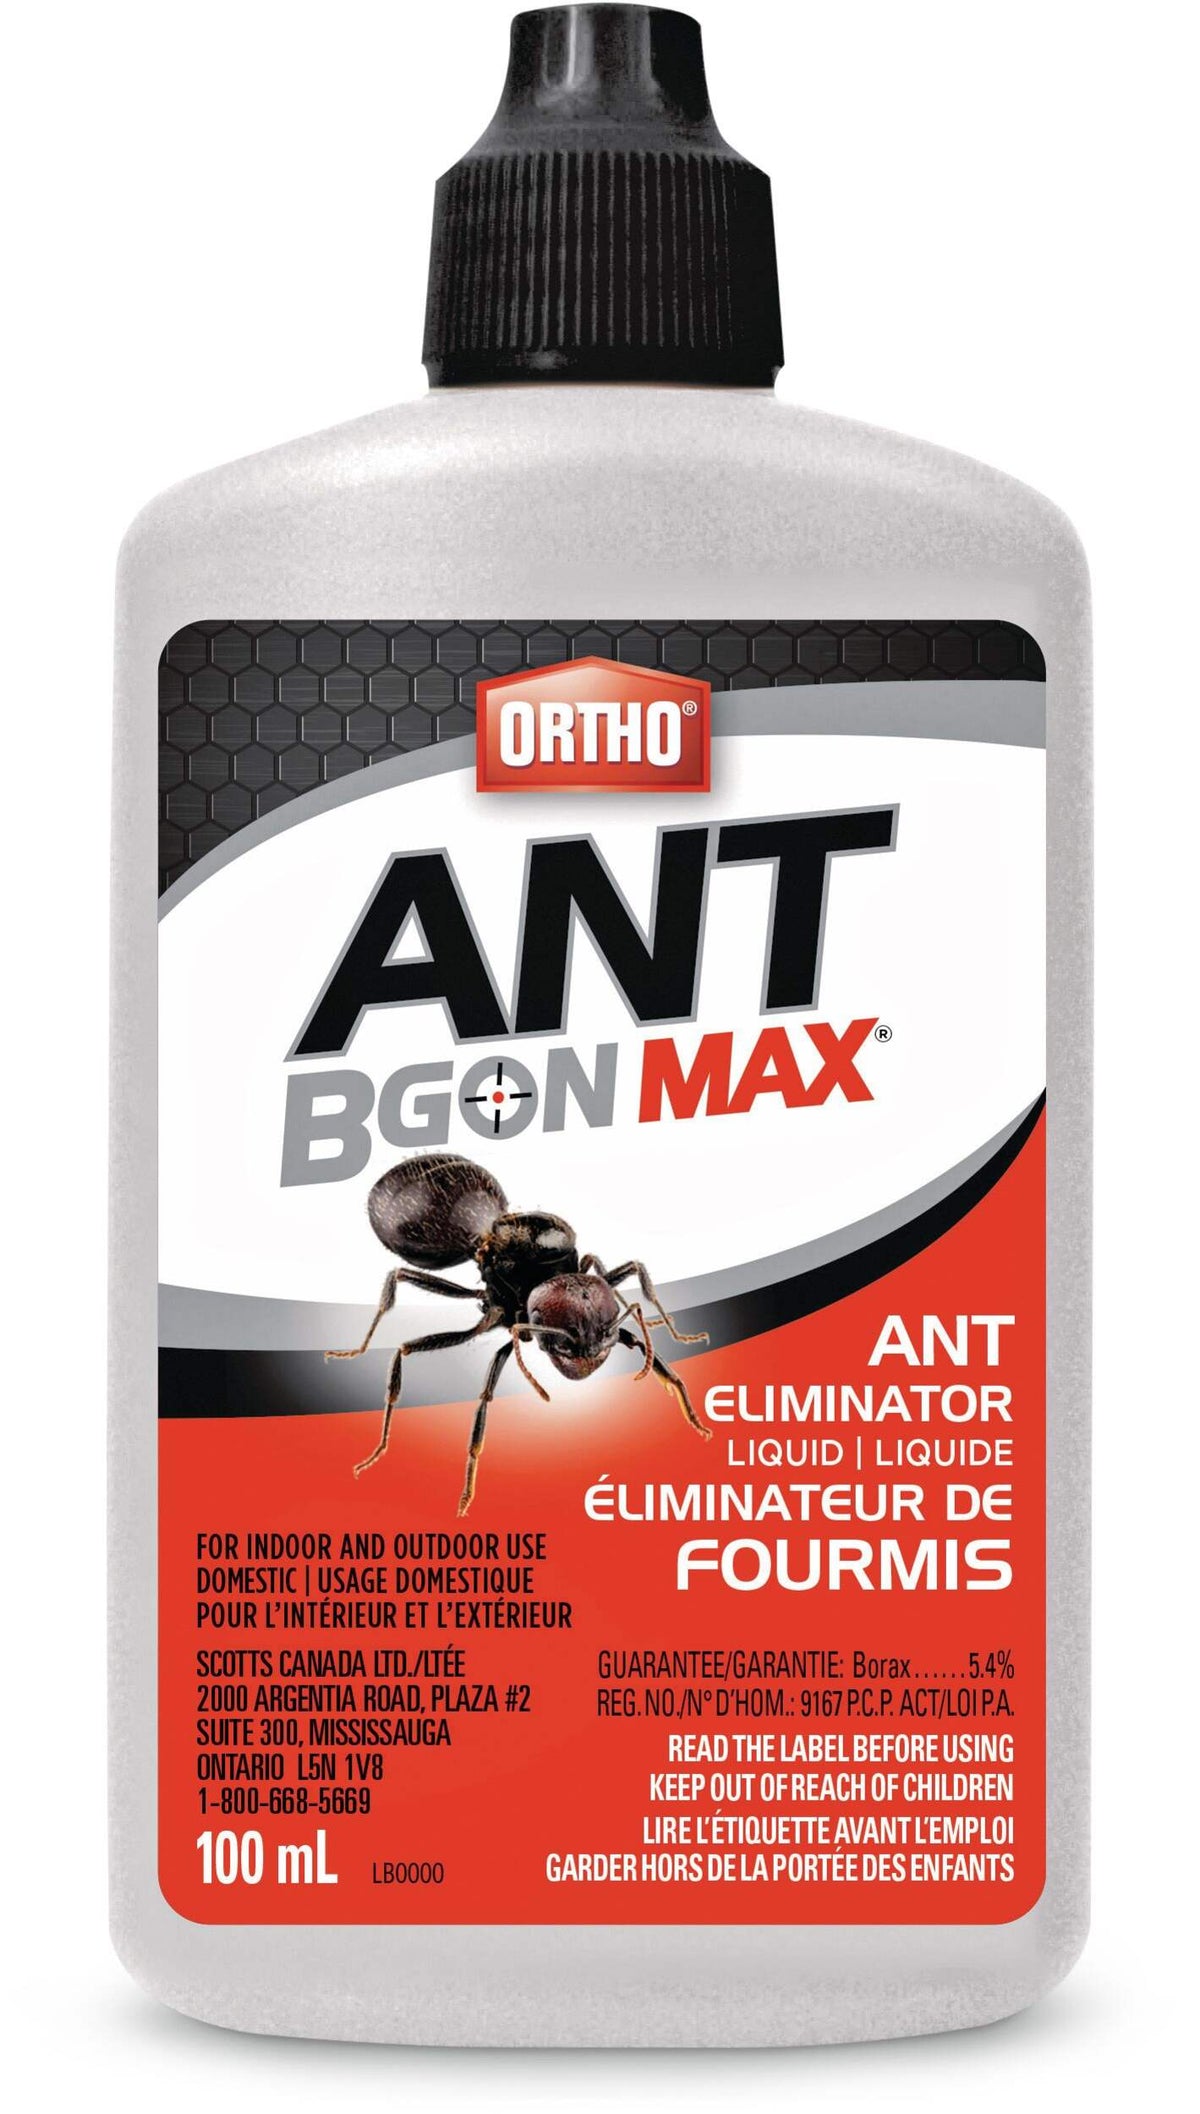 Insecticide liquide à fourmis Ortho Ant B Gon MAX, 100 ml